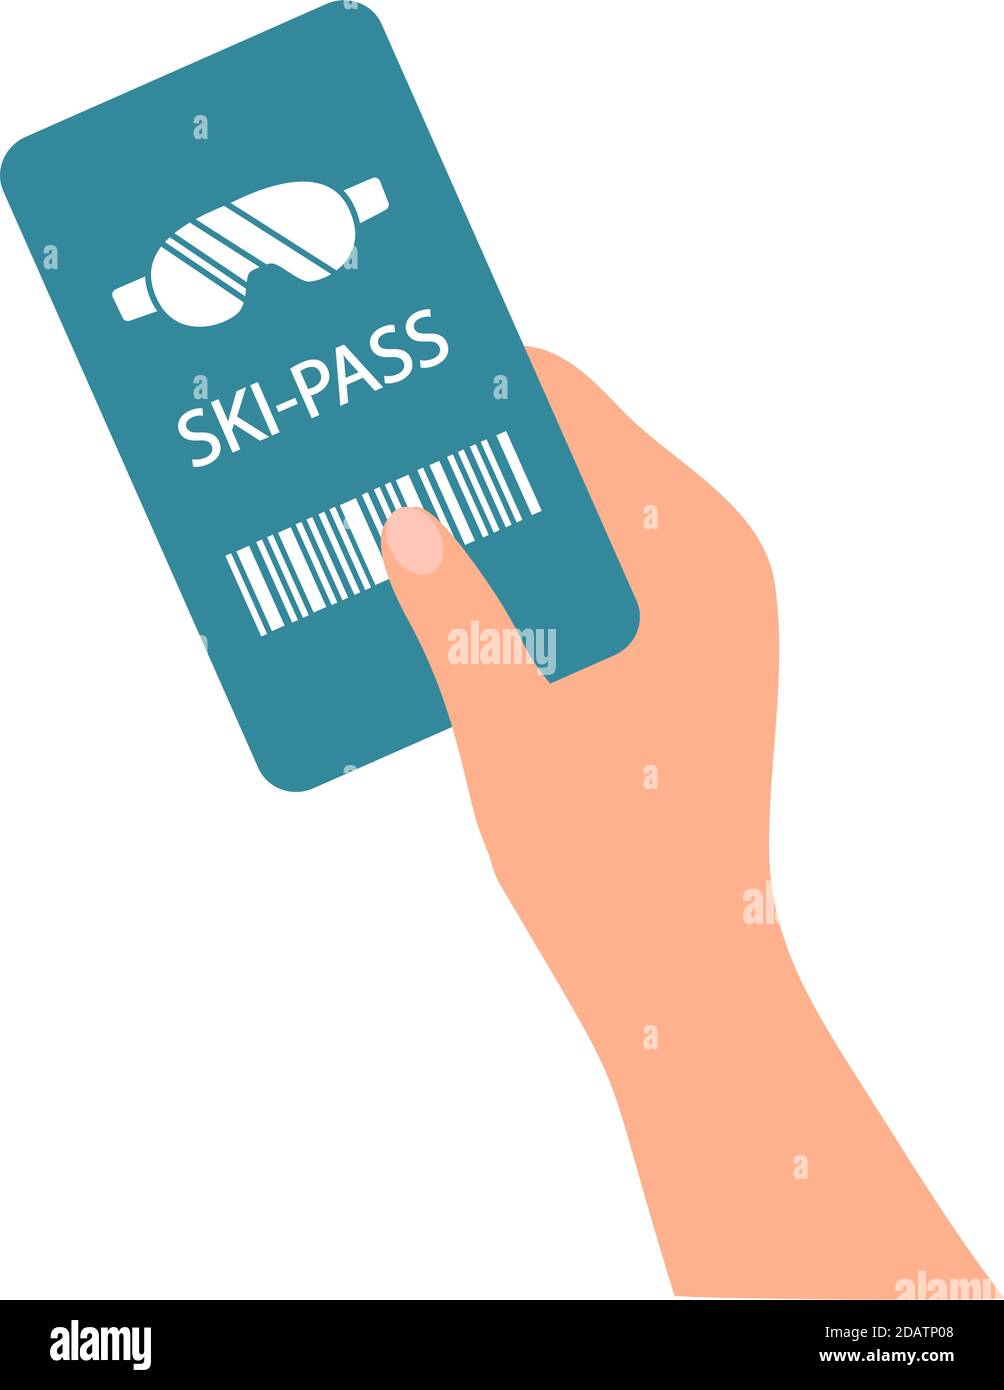 Skipass. Skiliftticket in der Hand. Flache Vektorgrafik Stock Vektor